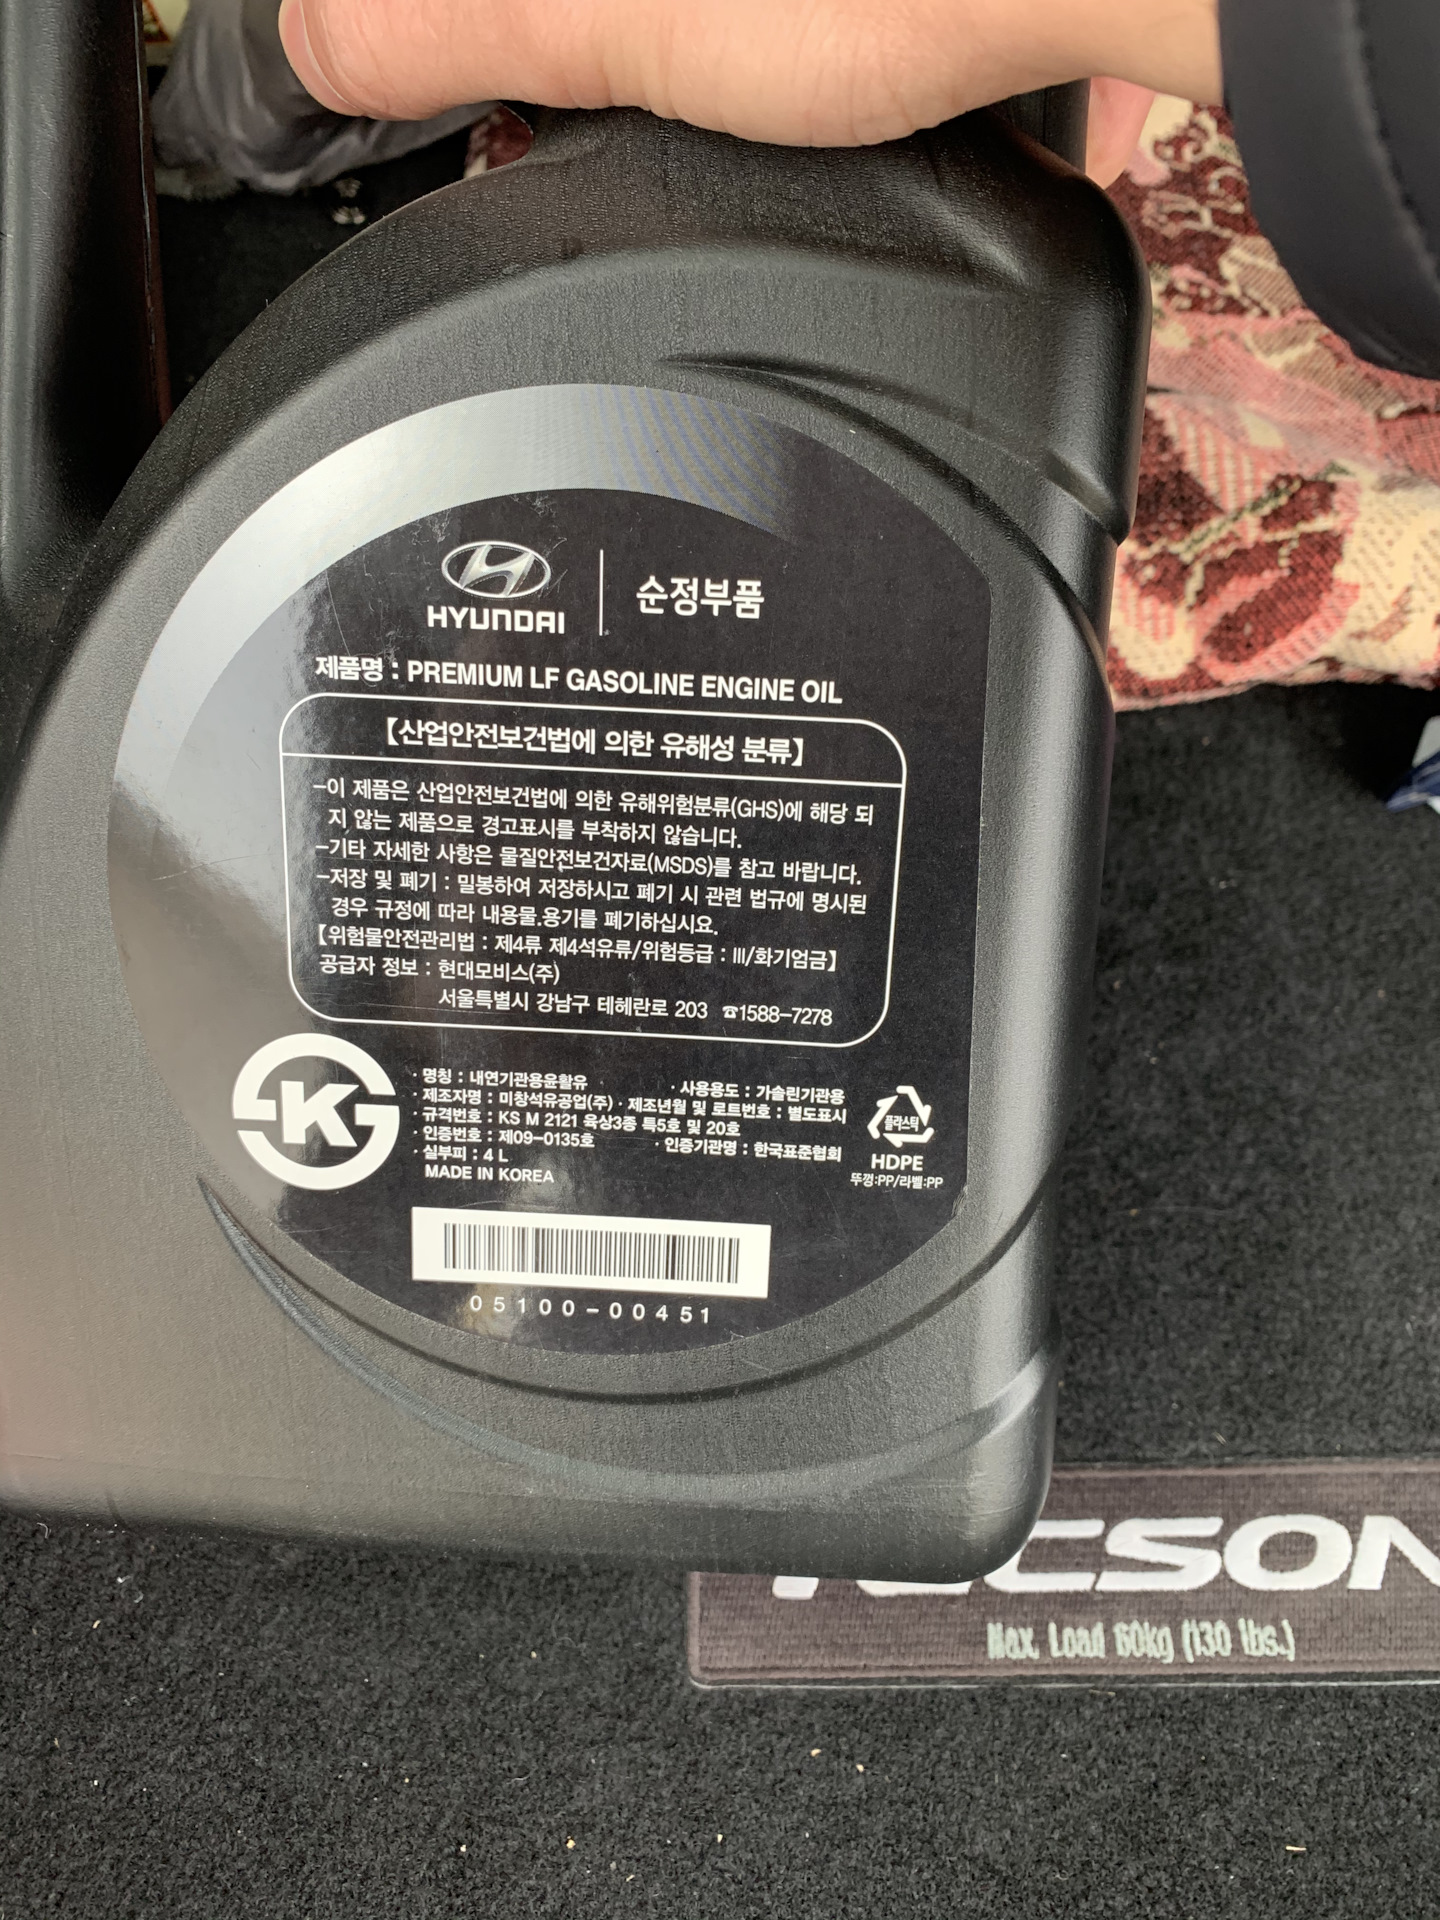 Hyundai Premium LF gasoline 5w-20. Премиум ЛФ 5w20 вес канистры. Прожарка Premium LF 5-20 bmwservice. Масло туссан 2018